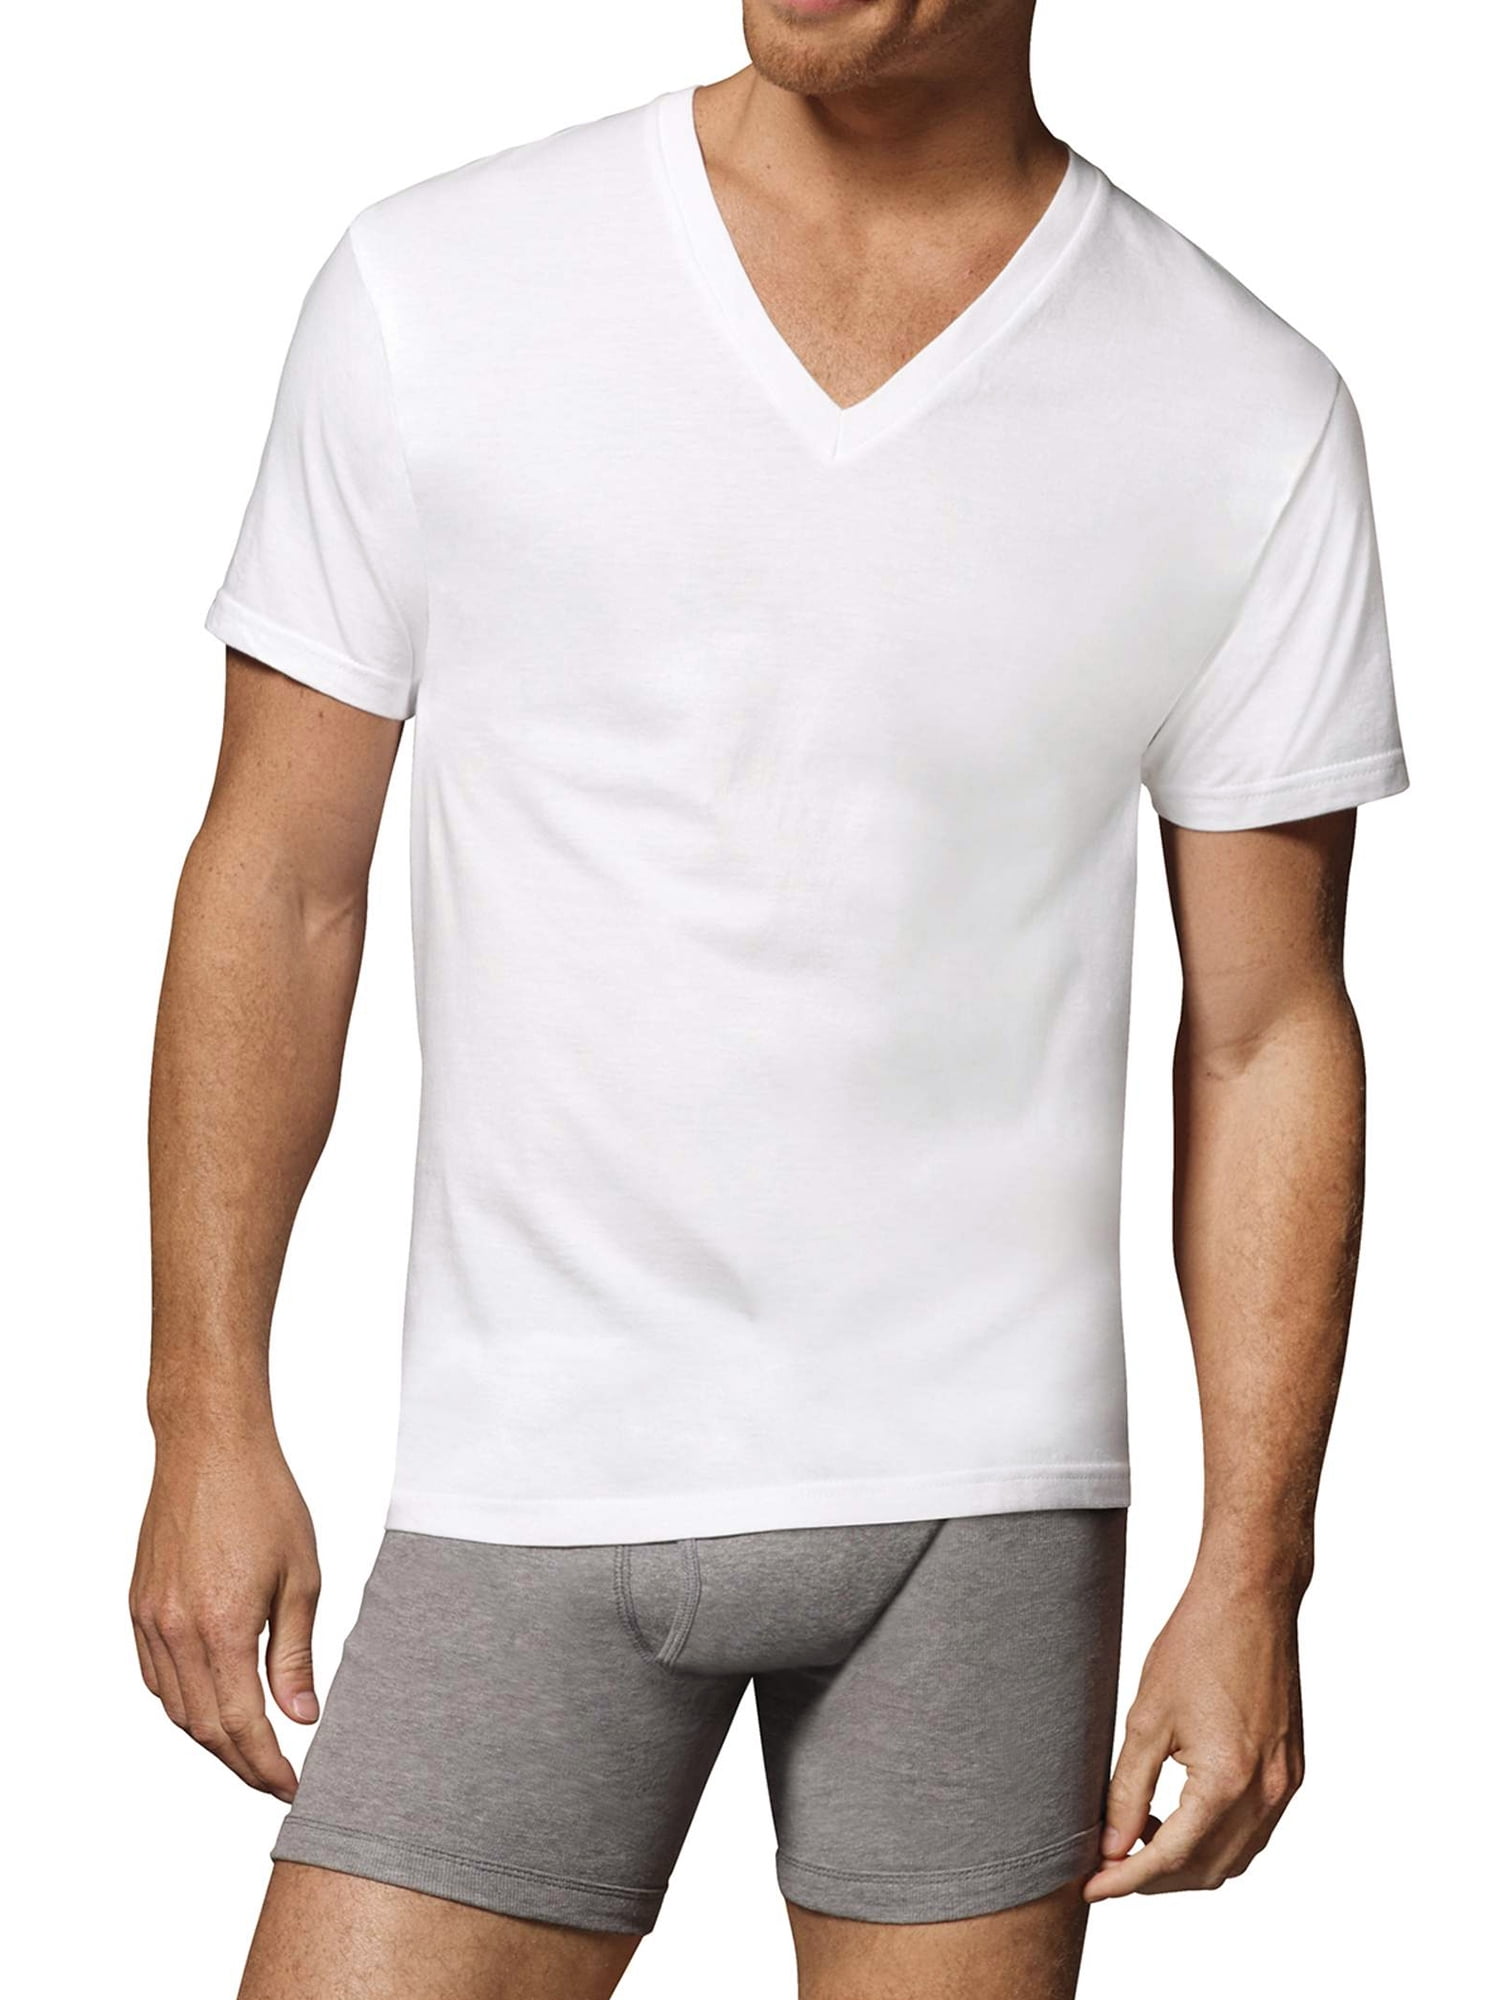 Hanes 3 Pack Men's 100% Cotton V Neck Undershirt Big Size 3X 